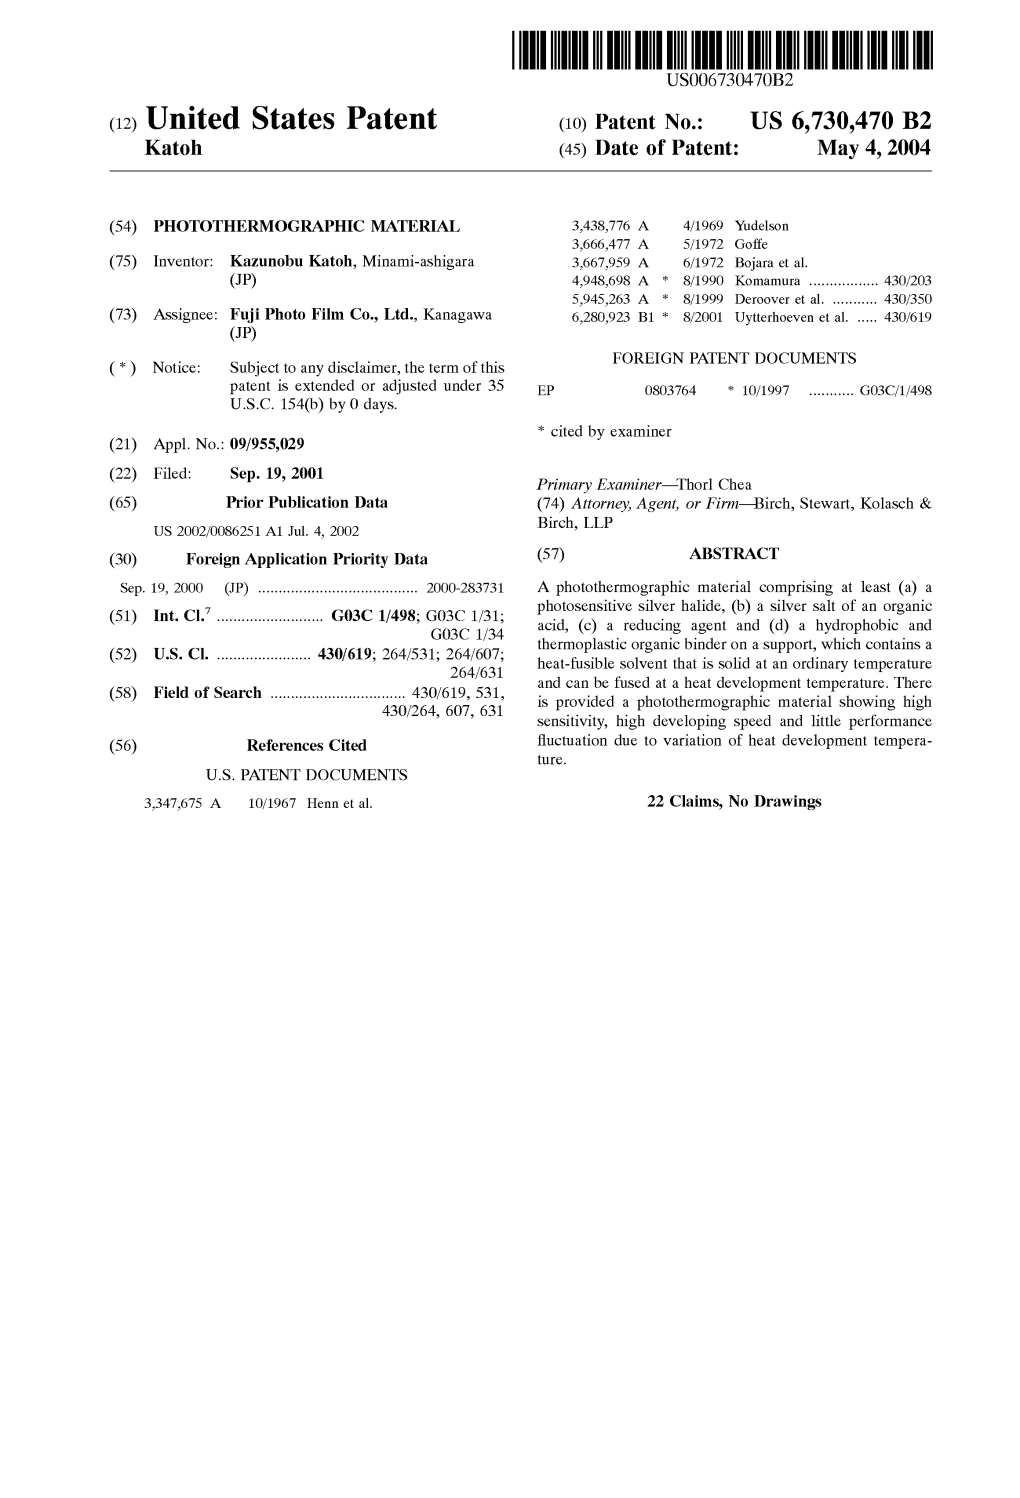 (12) United States Patent (10) Patent No.: US 6,730,470 B2 Katoh (45) Date of Patent: May 4, 2004